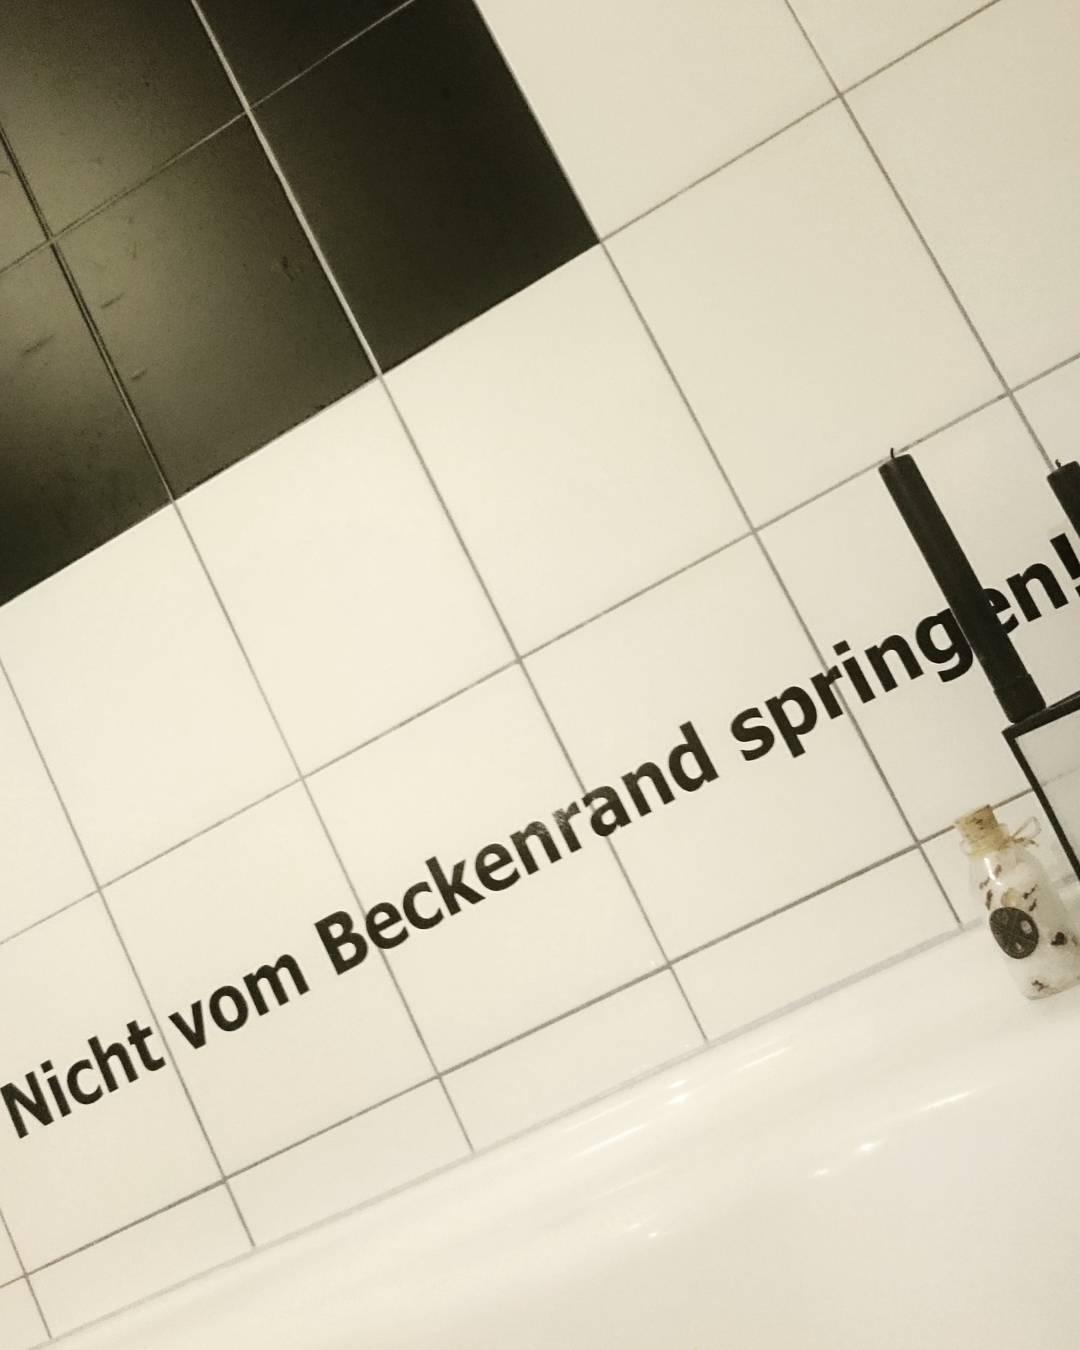 #nichtvombeckenrandspringen #bathroom #diy #pimpmybathroom #livingabc